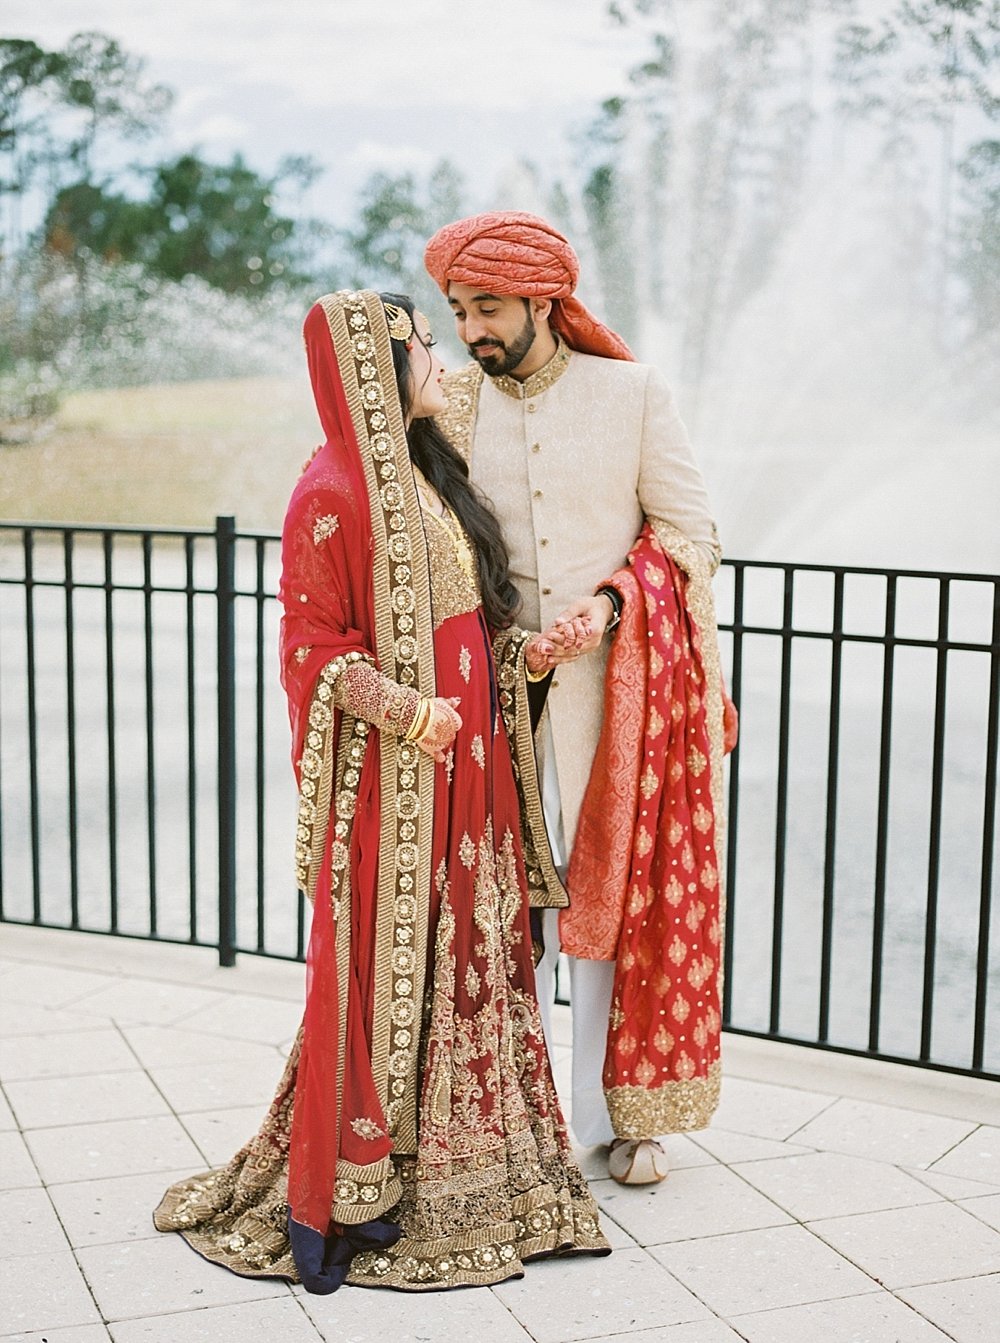 Colorful Indian Wedding Hilton Bonnet Creek Waldorf Astoria Orlando FL - Portra 400 - Film Photography | Ashley Holstein Photography #film #indianwedding